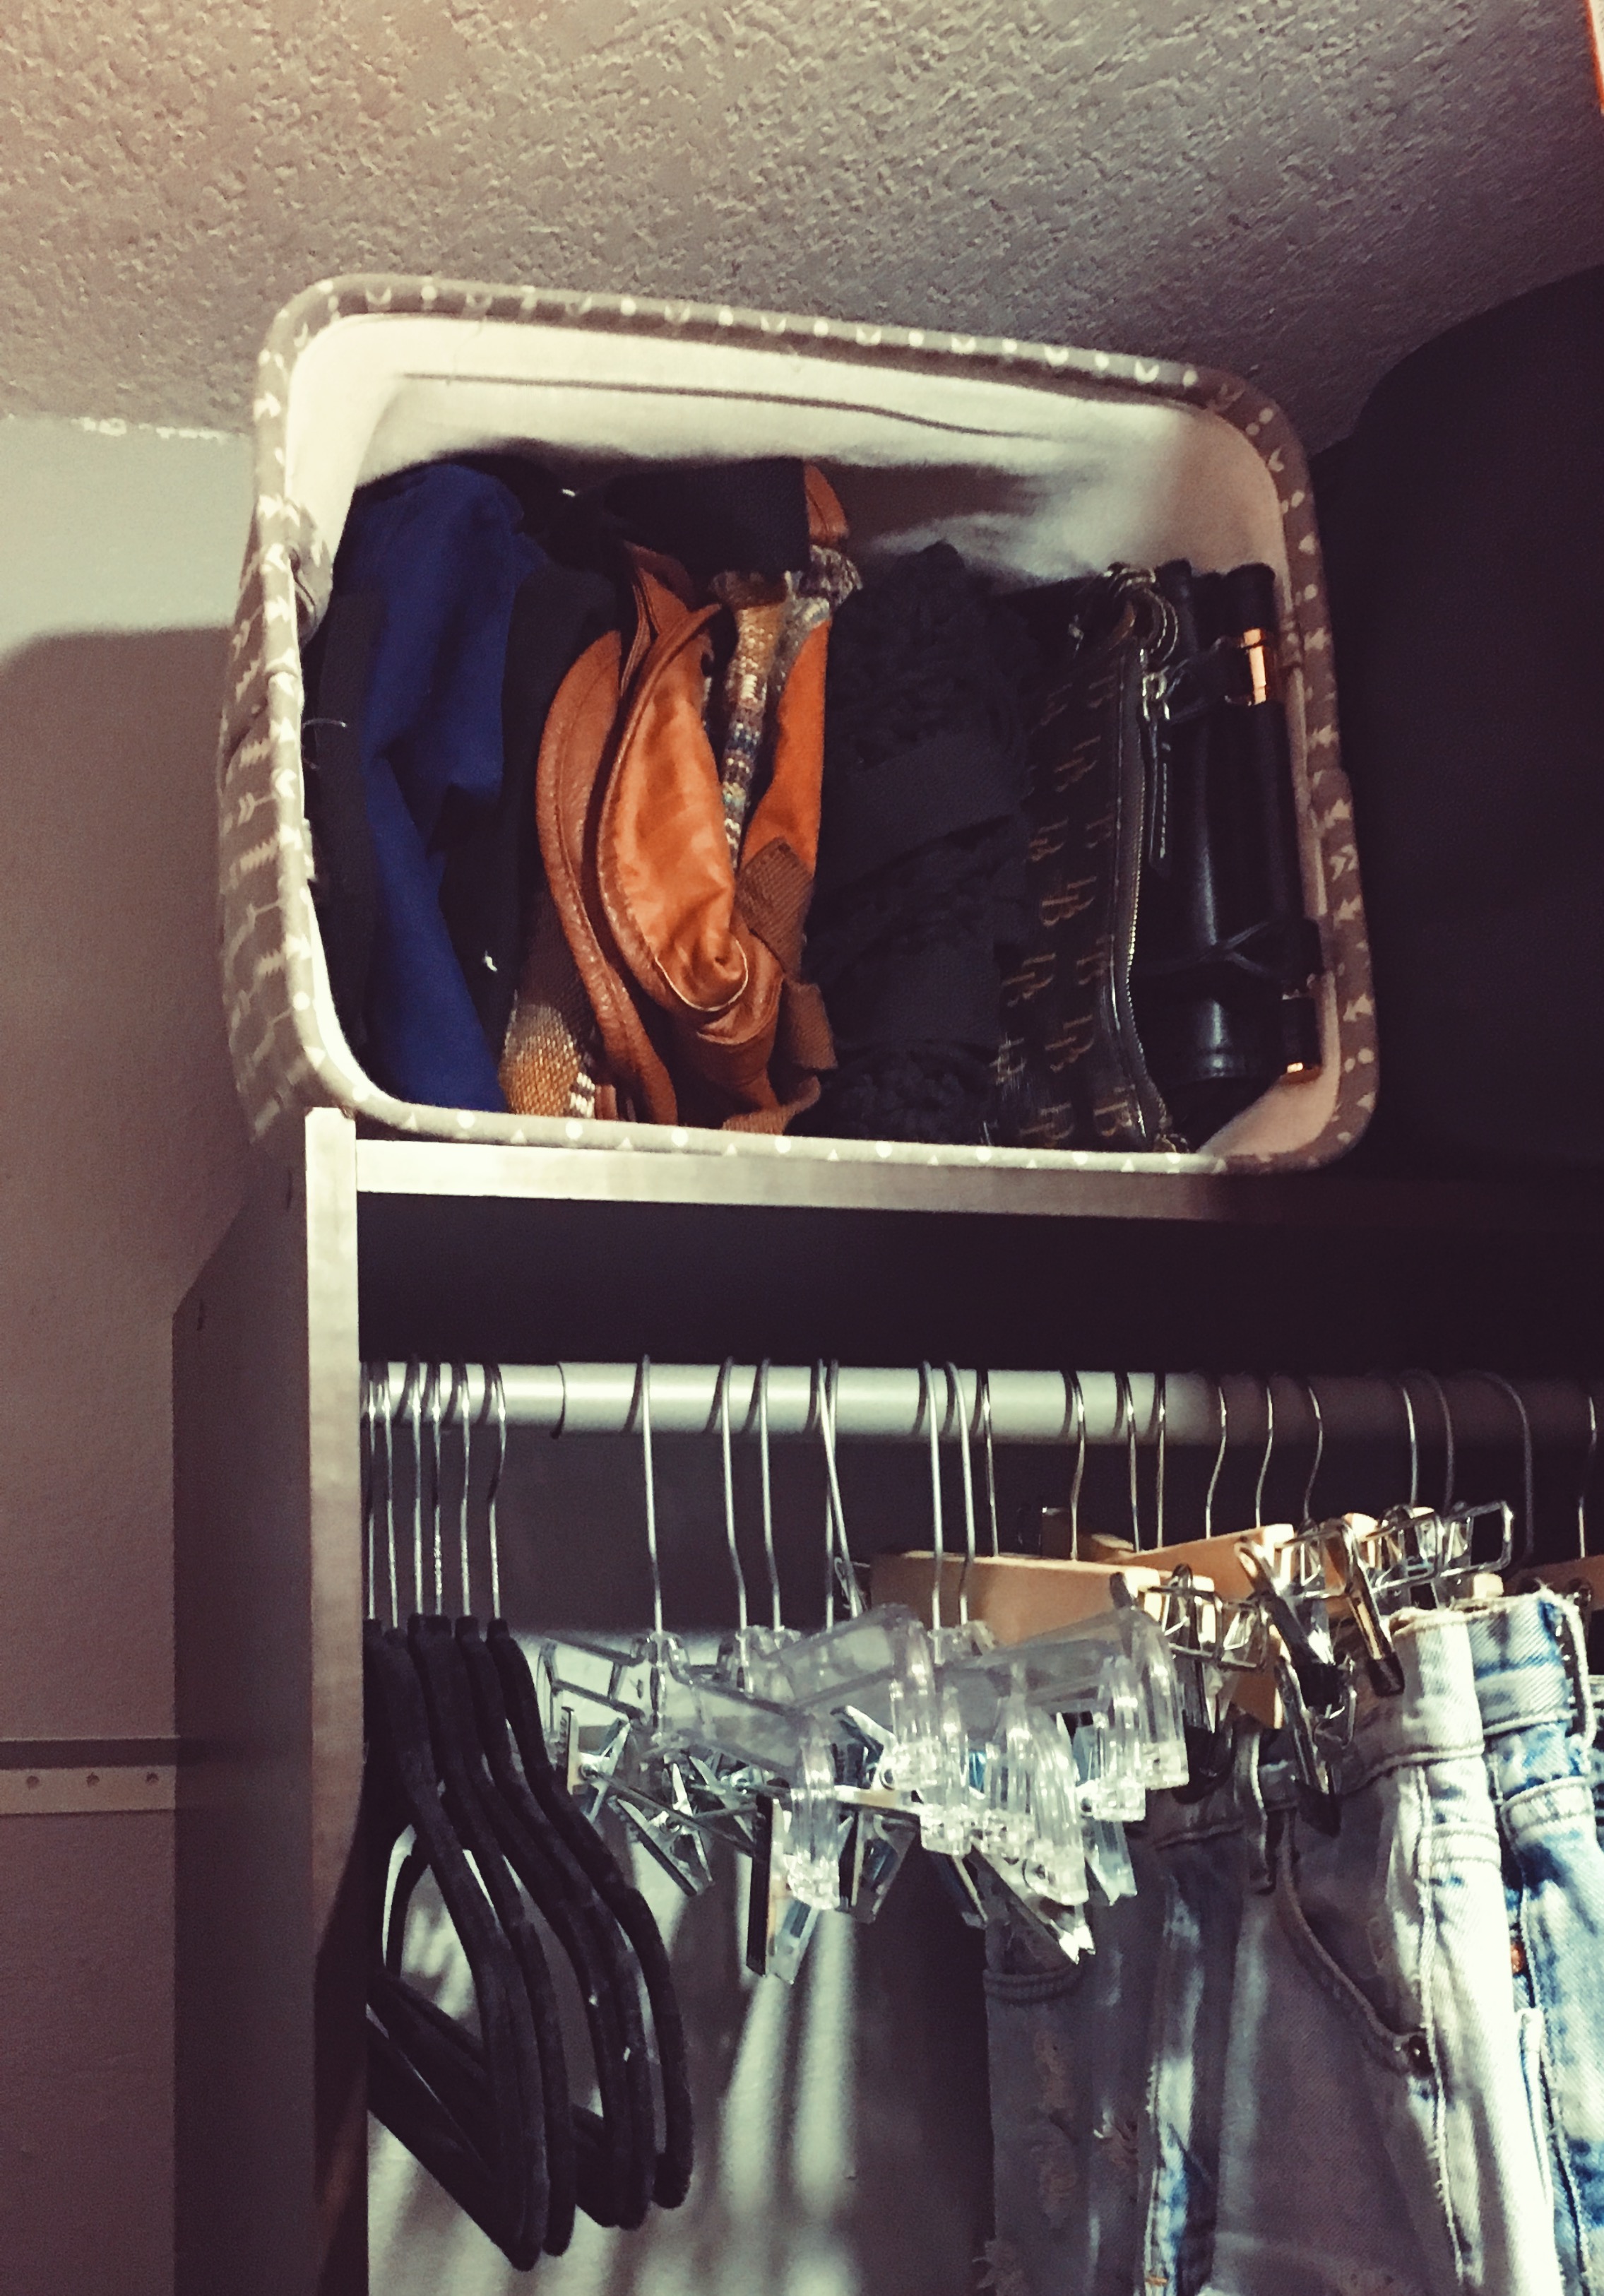 purses in a bin-purse storage-bag storage-closet organizing-wear who you are